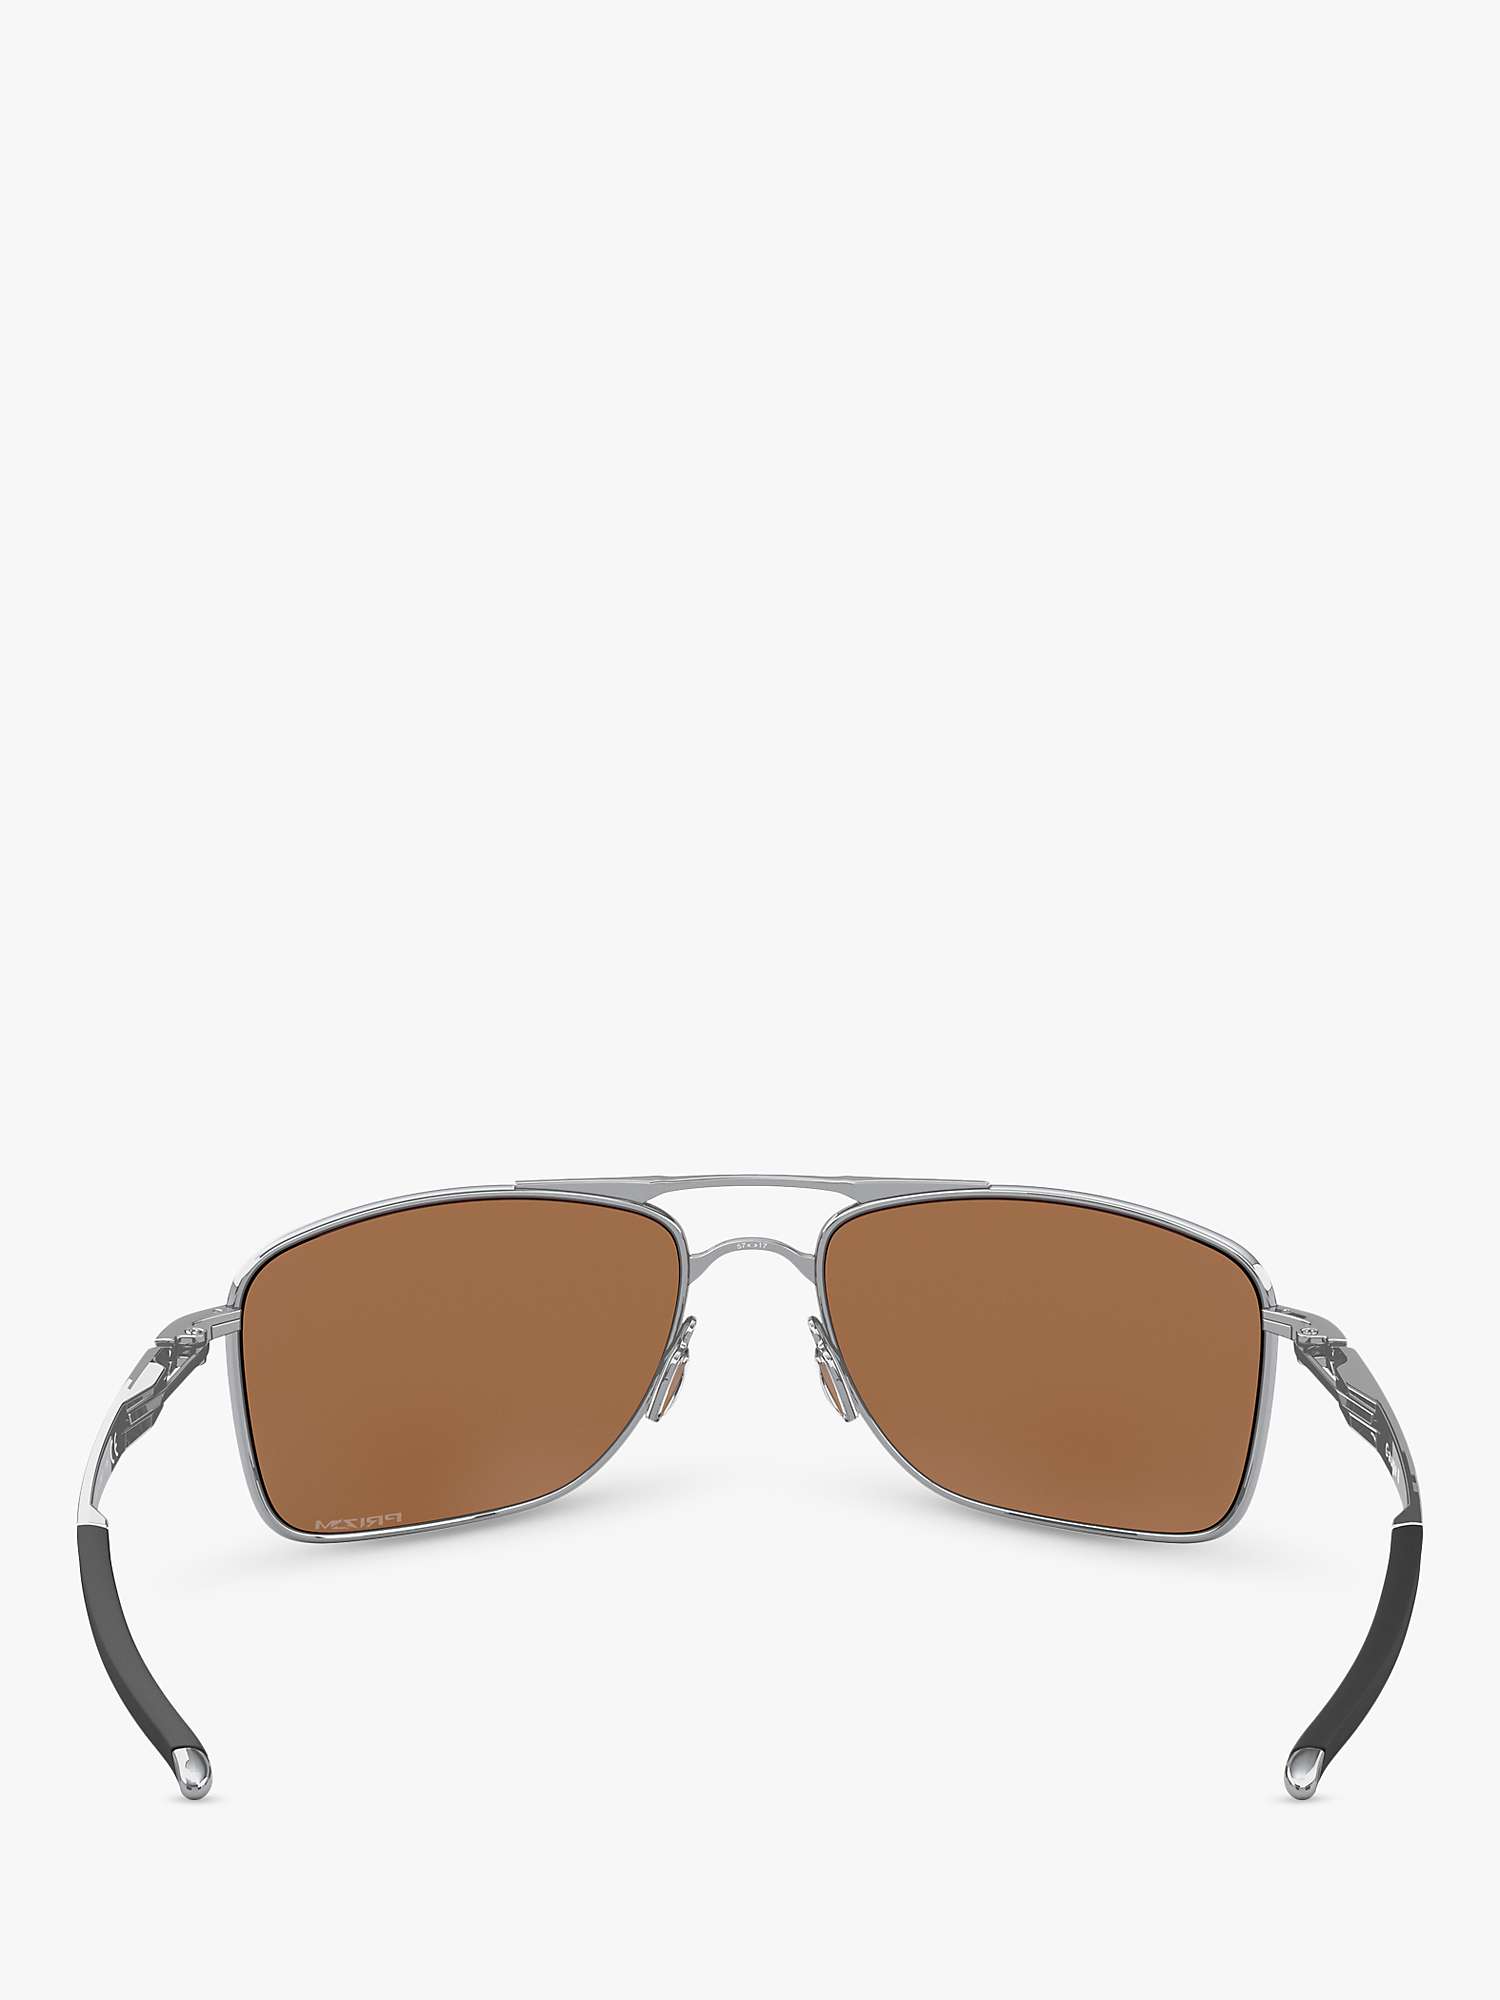 Buy Oakley OO4124 Men's Rectangular Sunglasses, Brown/Silver Online at johnlewis.com